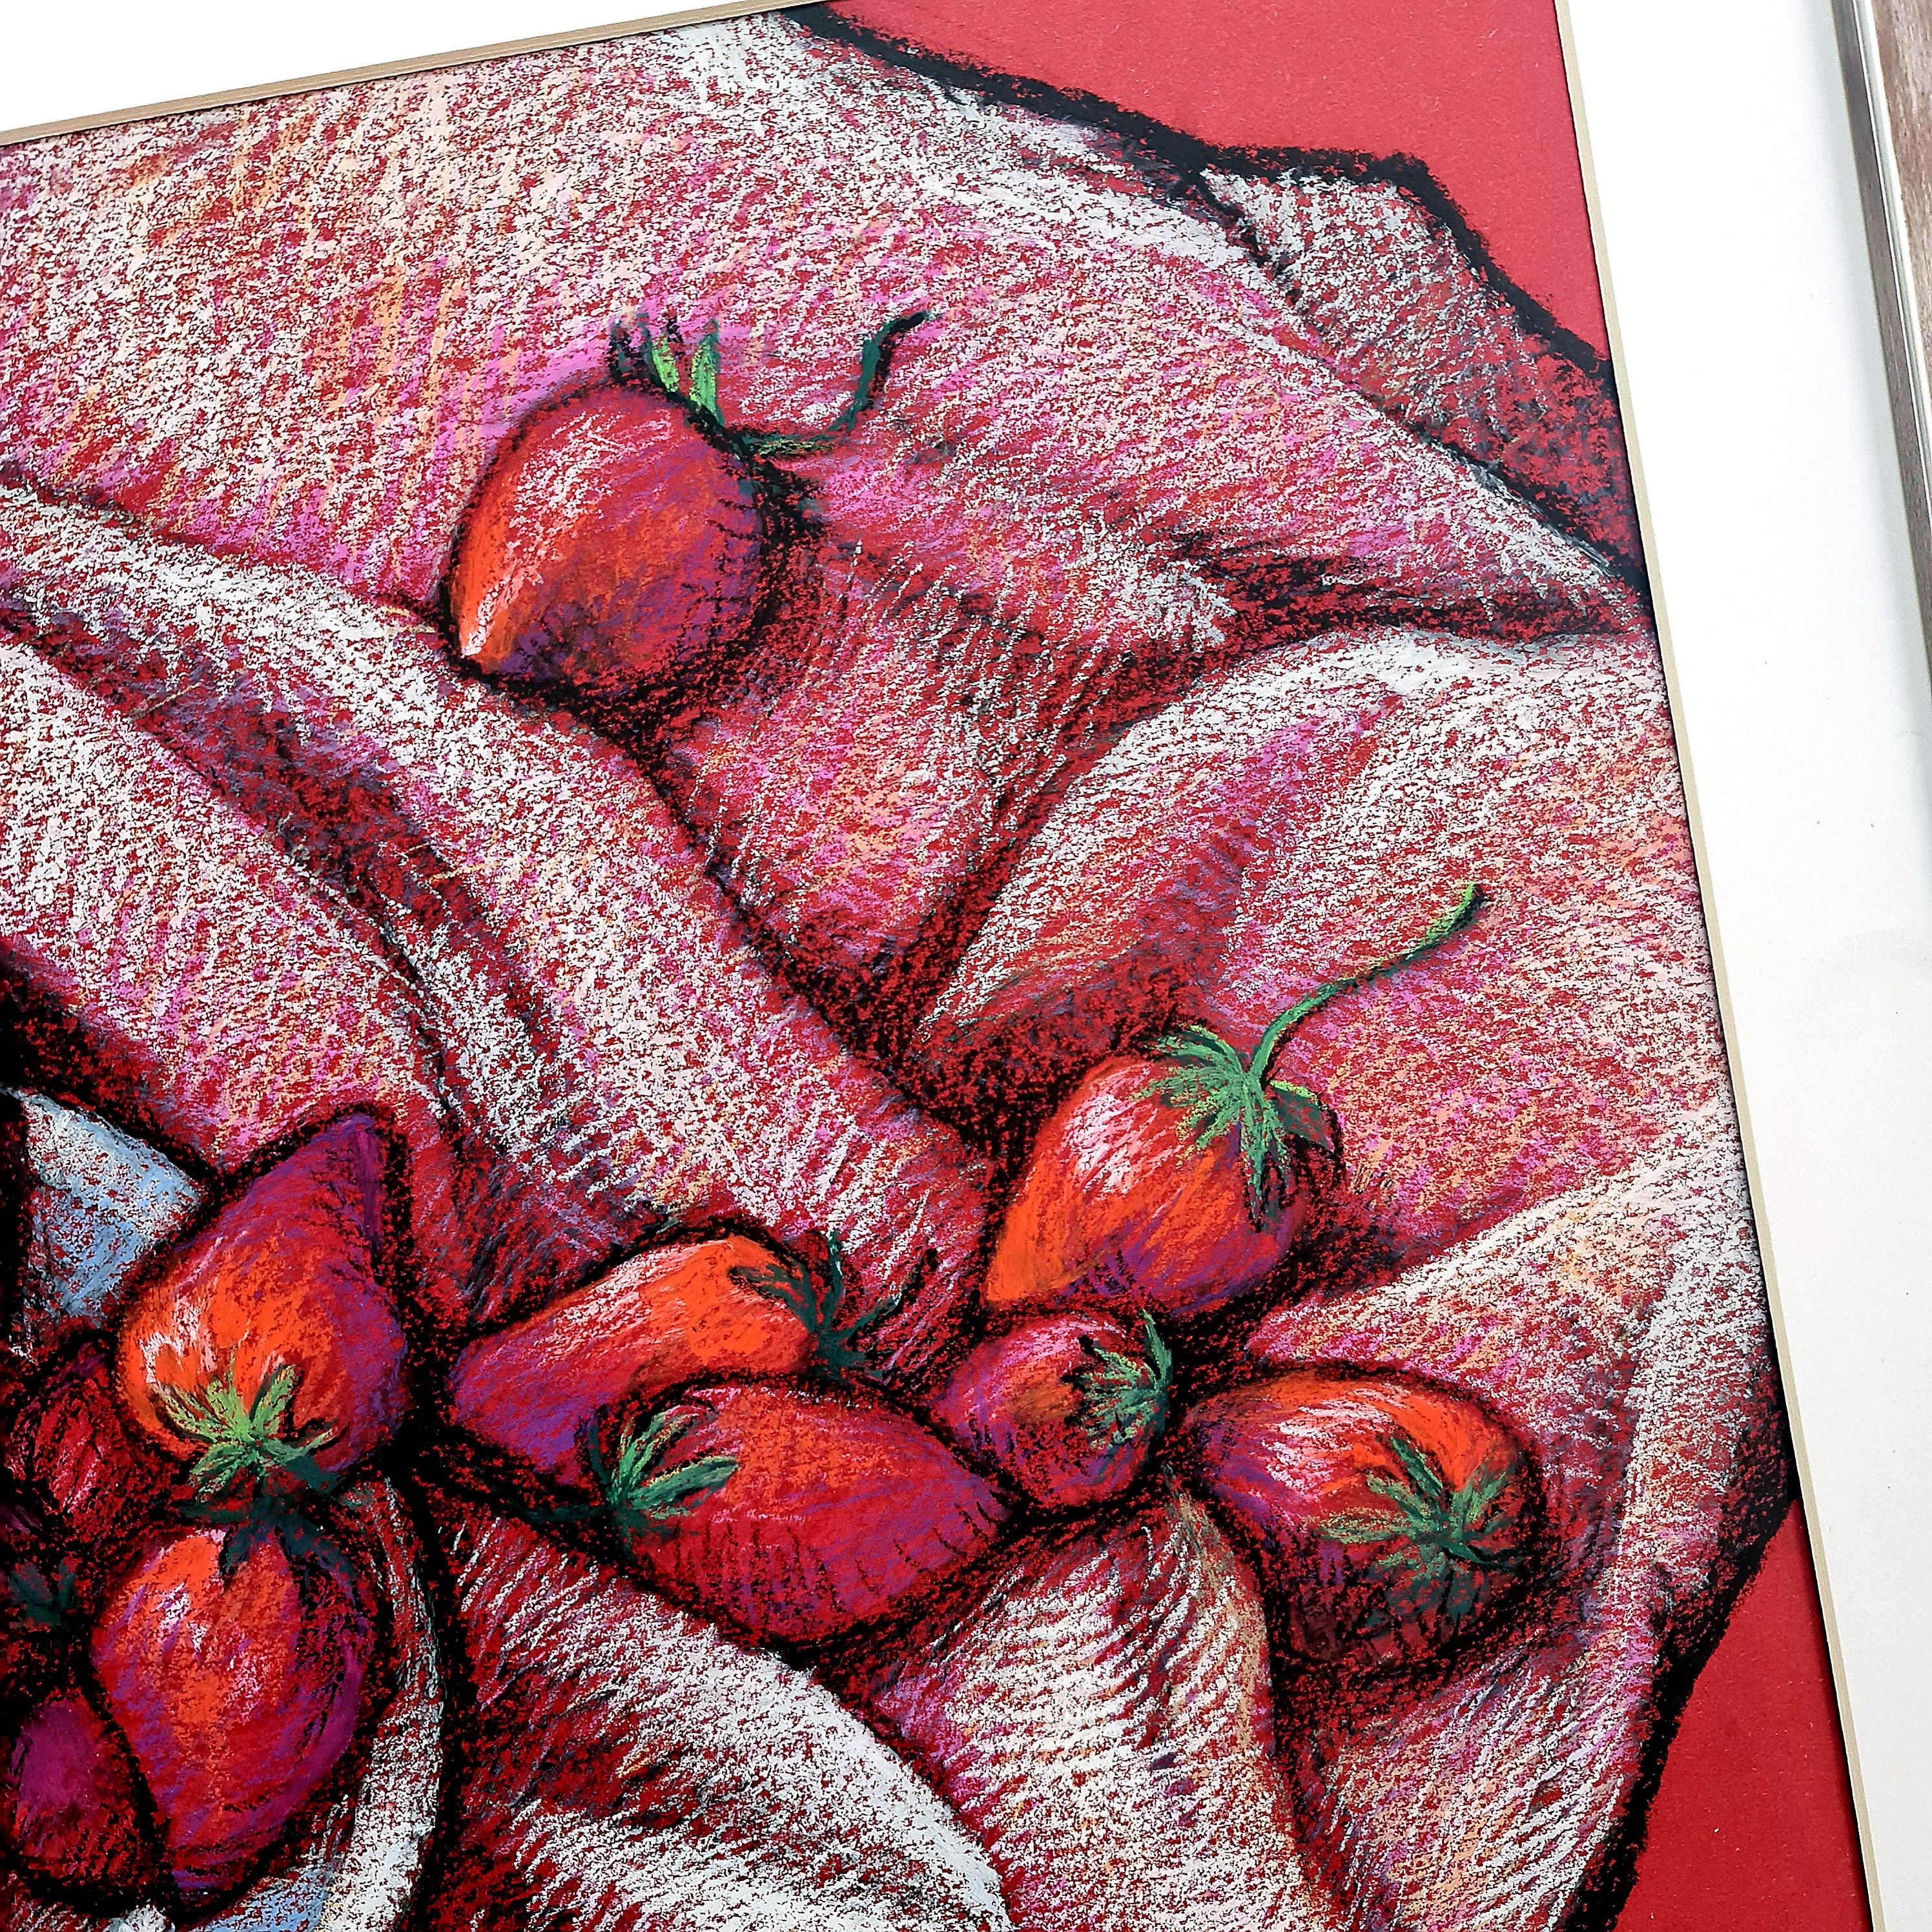 Sie sind meine süße Erdbeerbeerbeere. (Amerikanischer Realismus), Painting, von Lilya Volskaya